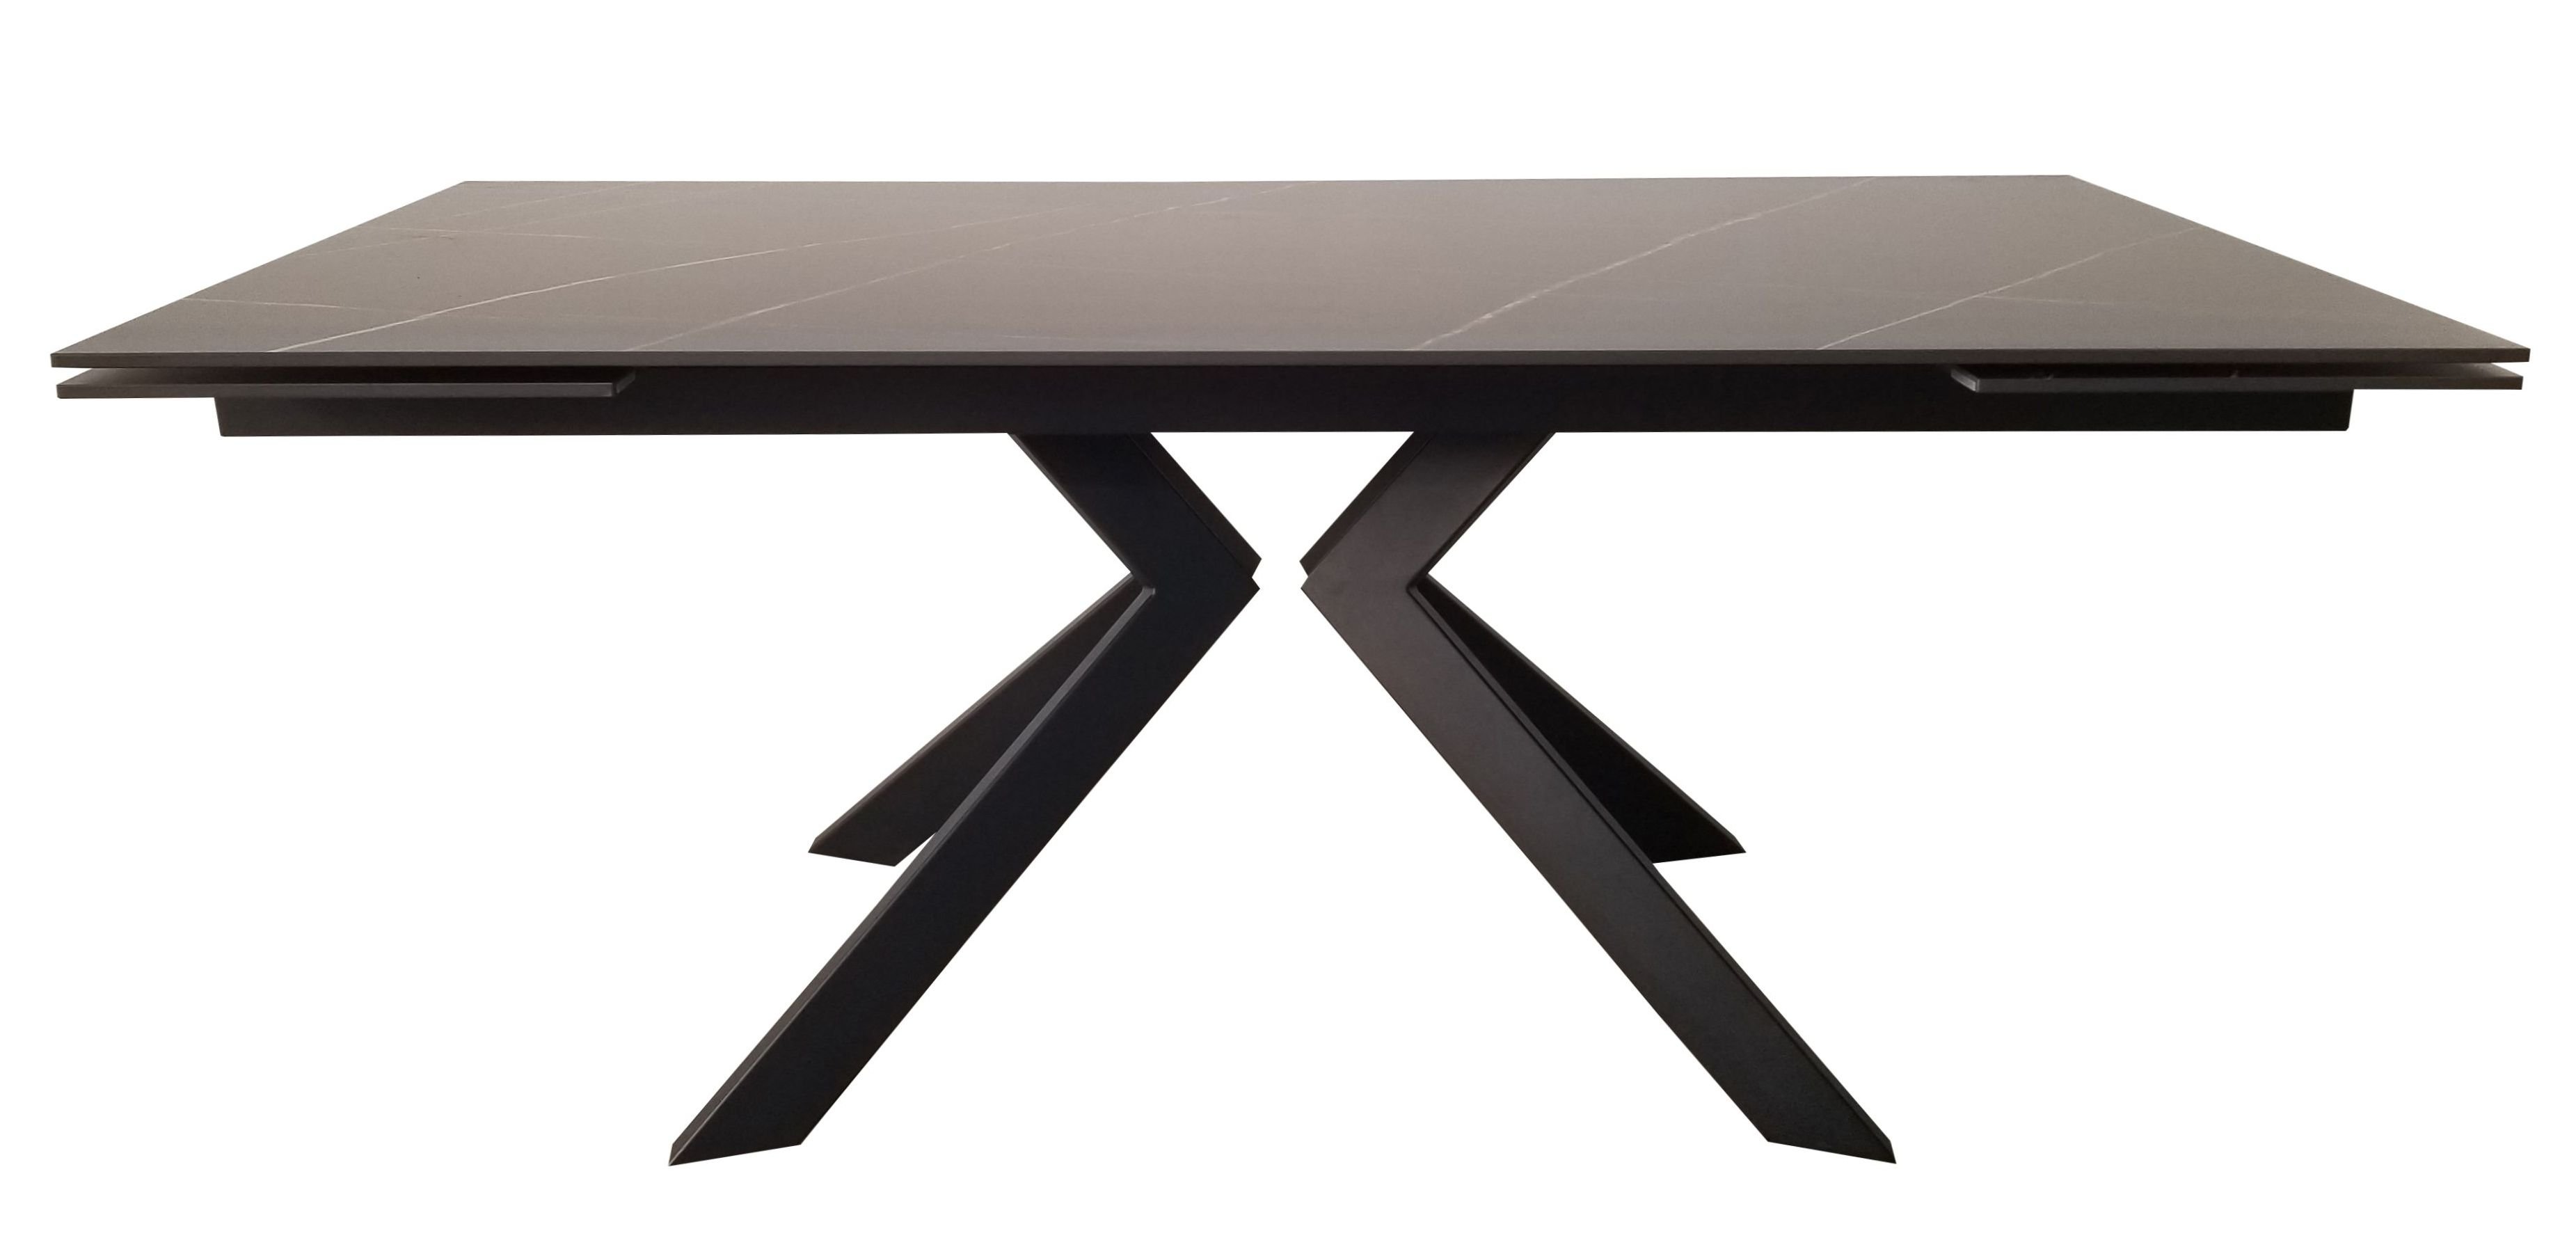 Swank Lofty Black стол обеденный керамика 180-260 см Concepto